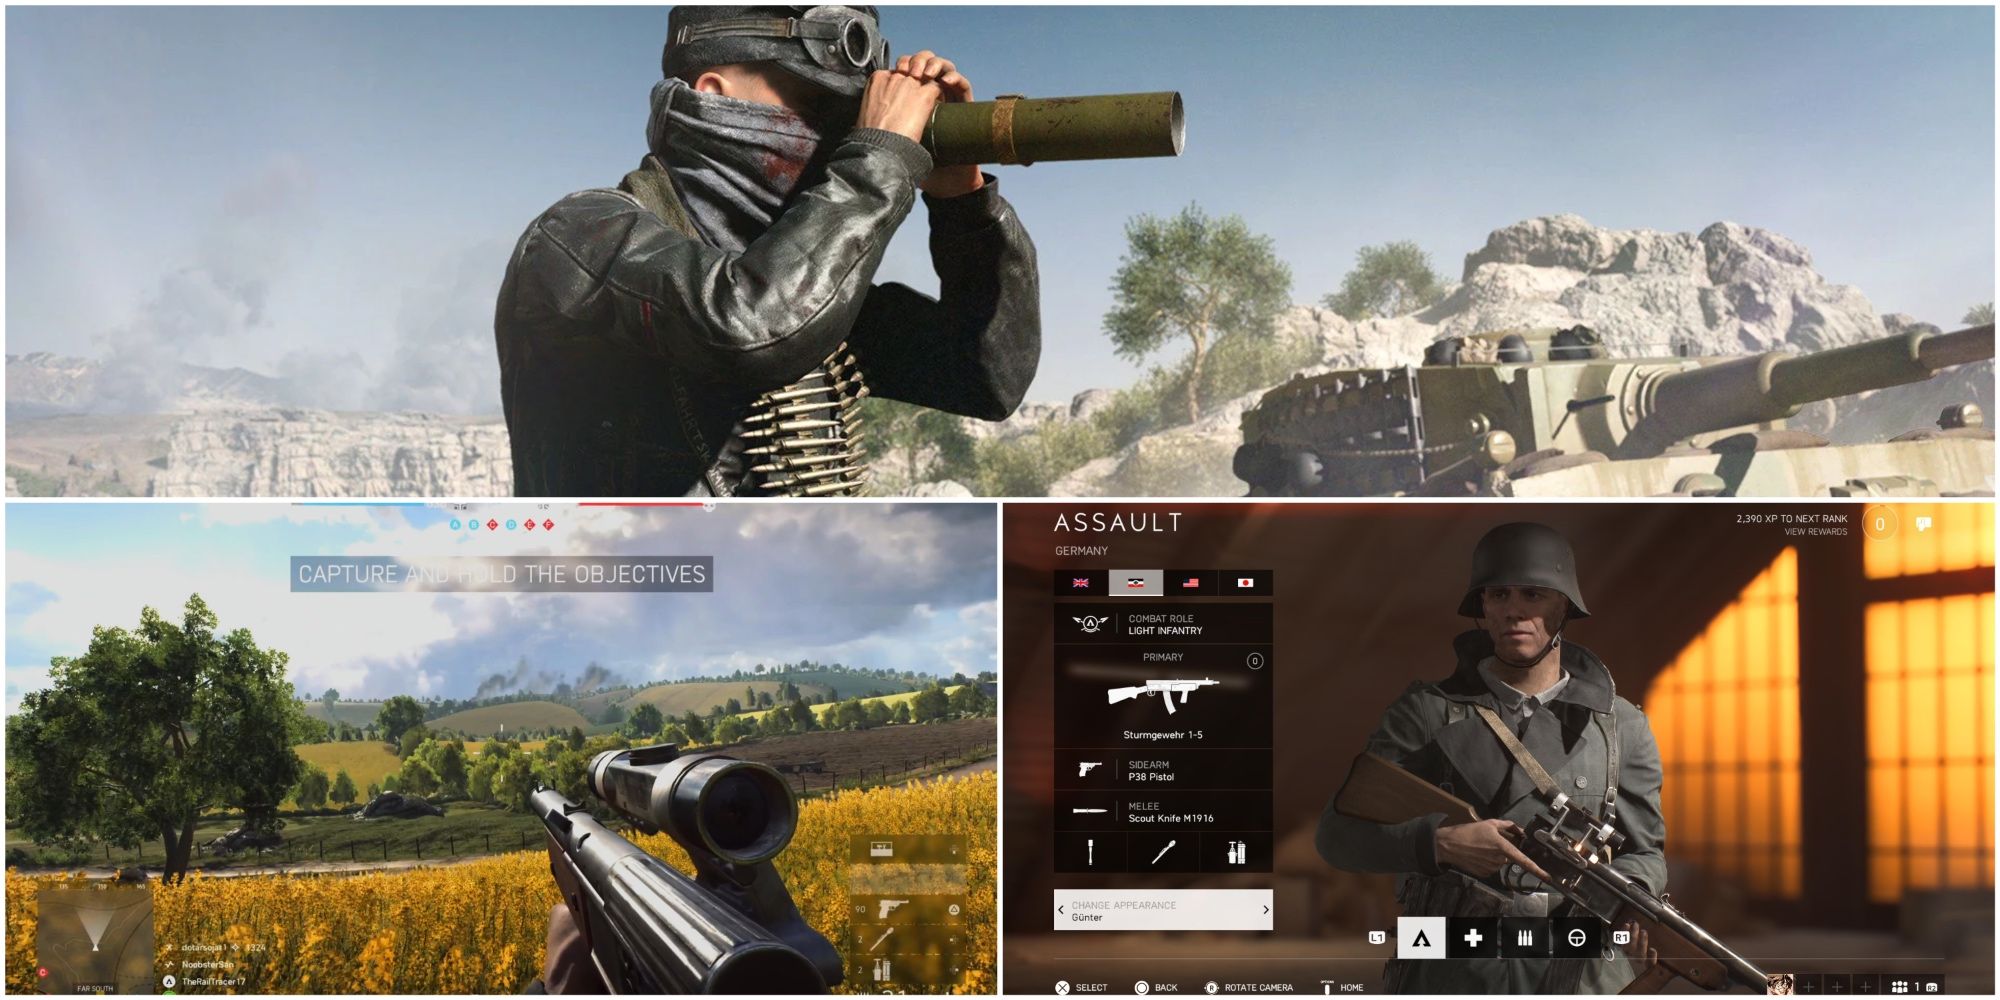 Split image showing Assault Rifles in Battlefield 5.